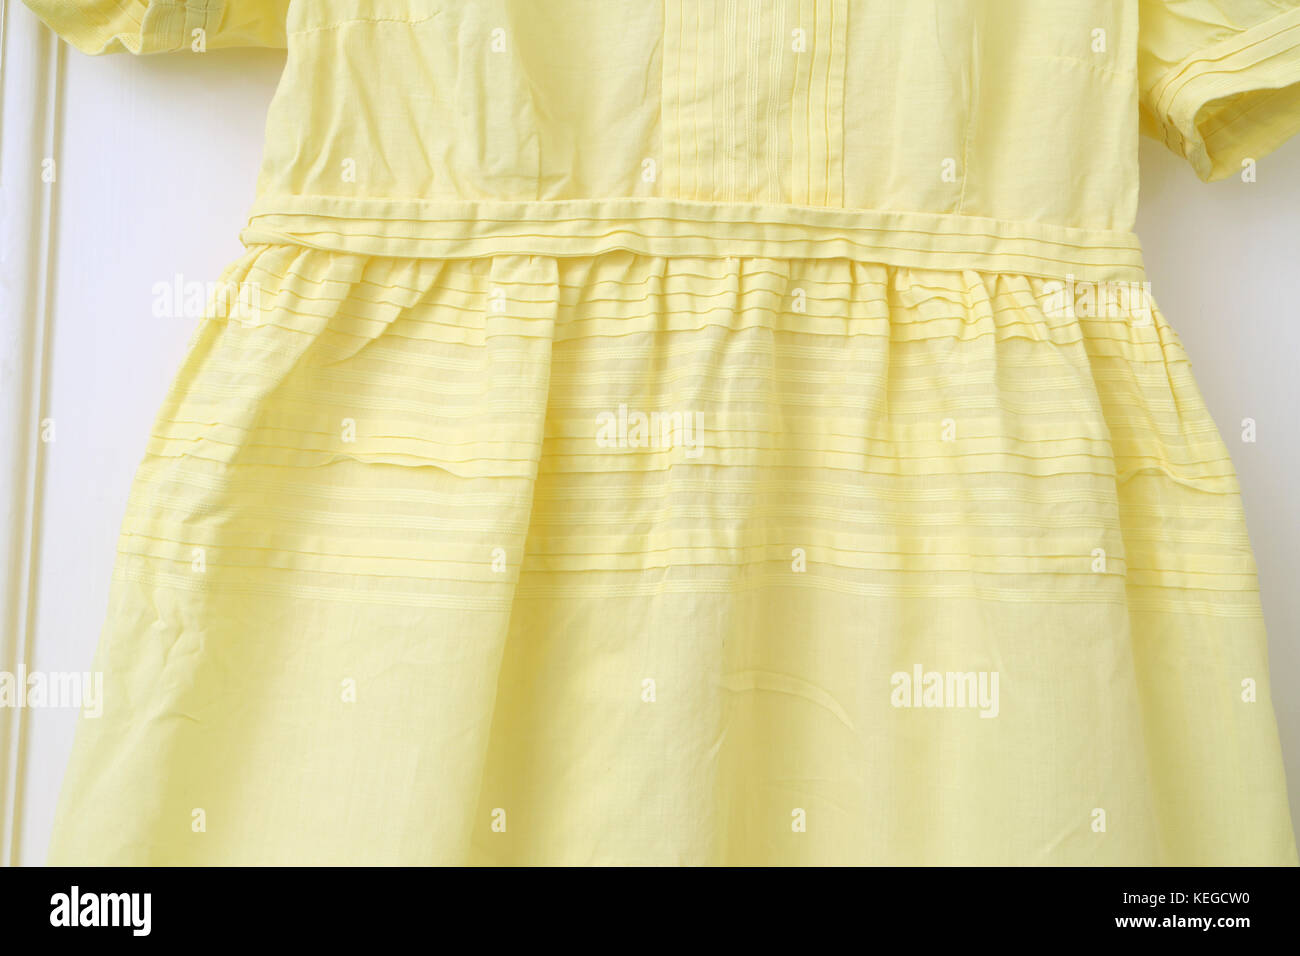 Vintage Handmade Yellow Dress Stock Photo